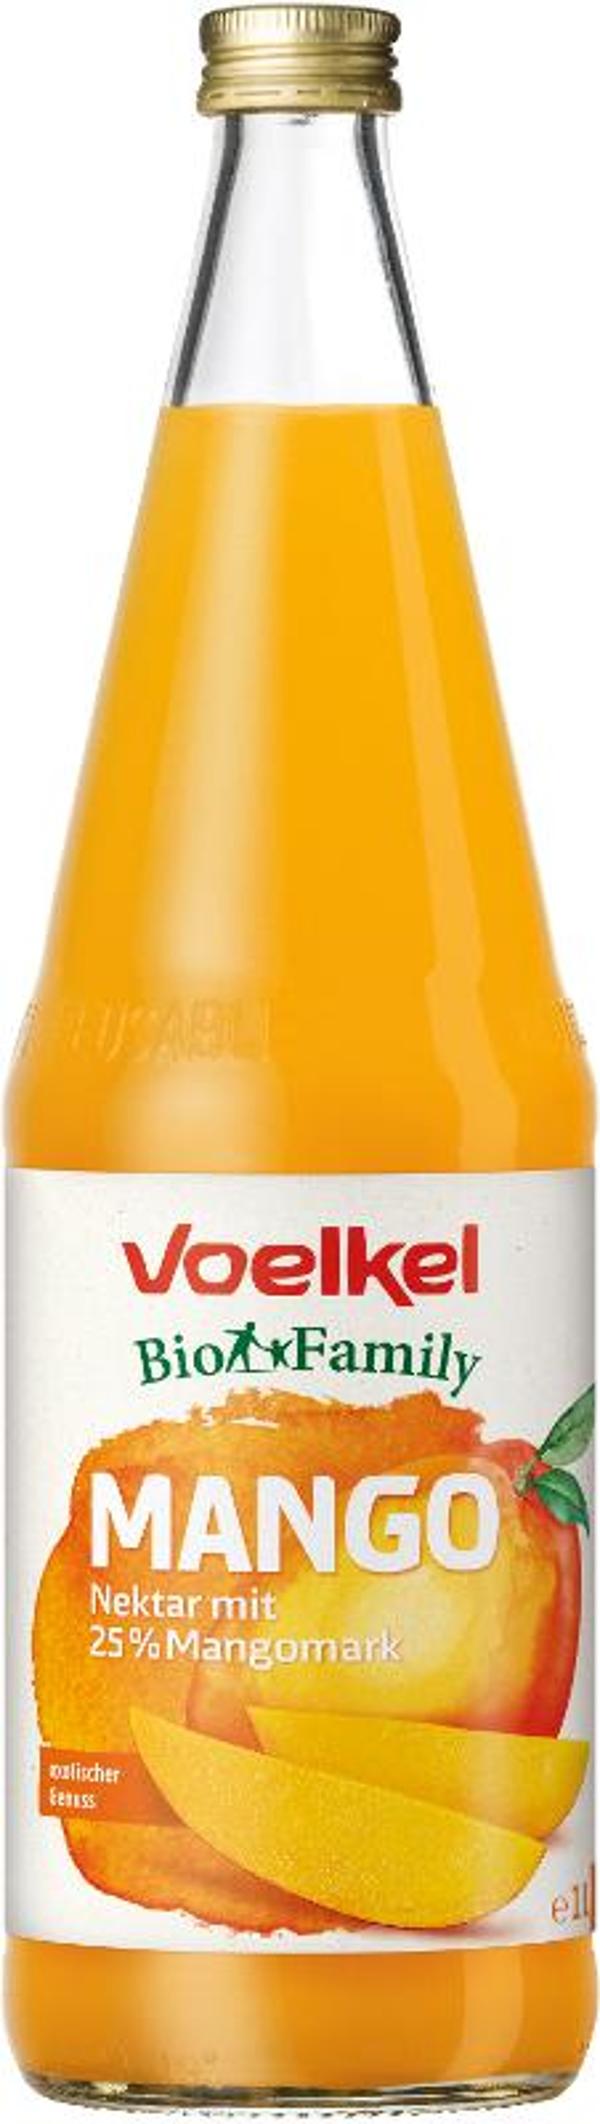 Produktfoto zu Family Mango-Saft 1l Flasche